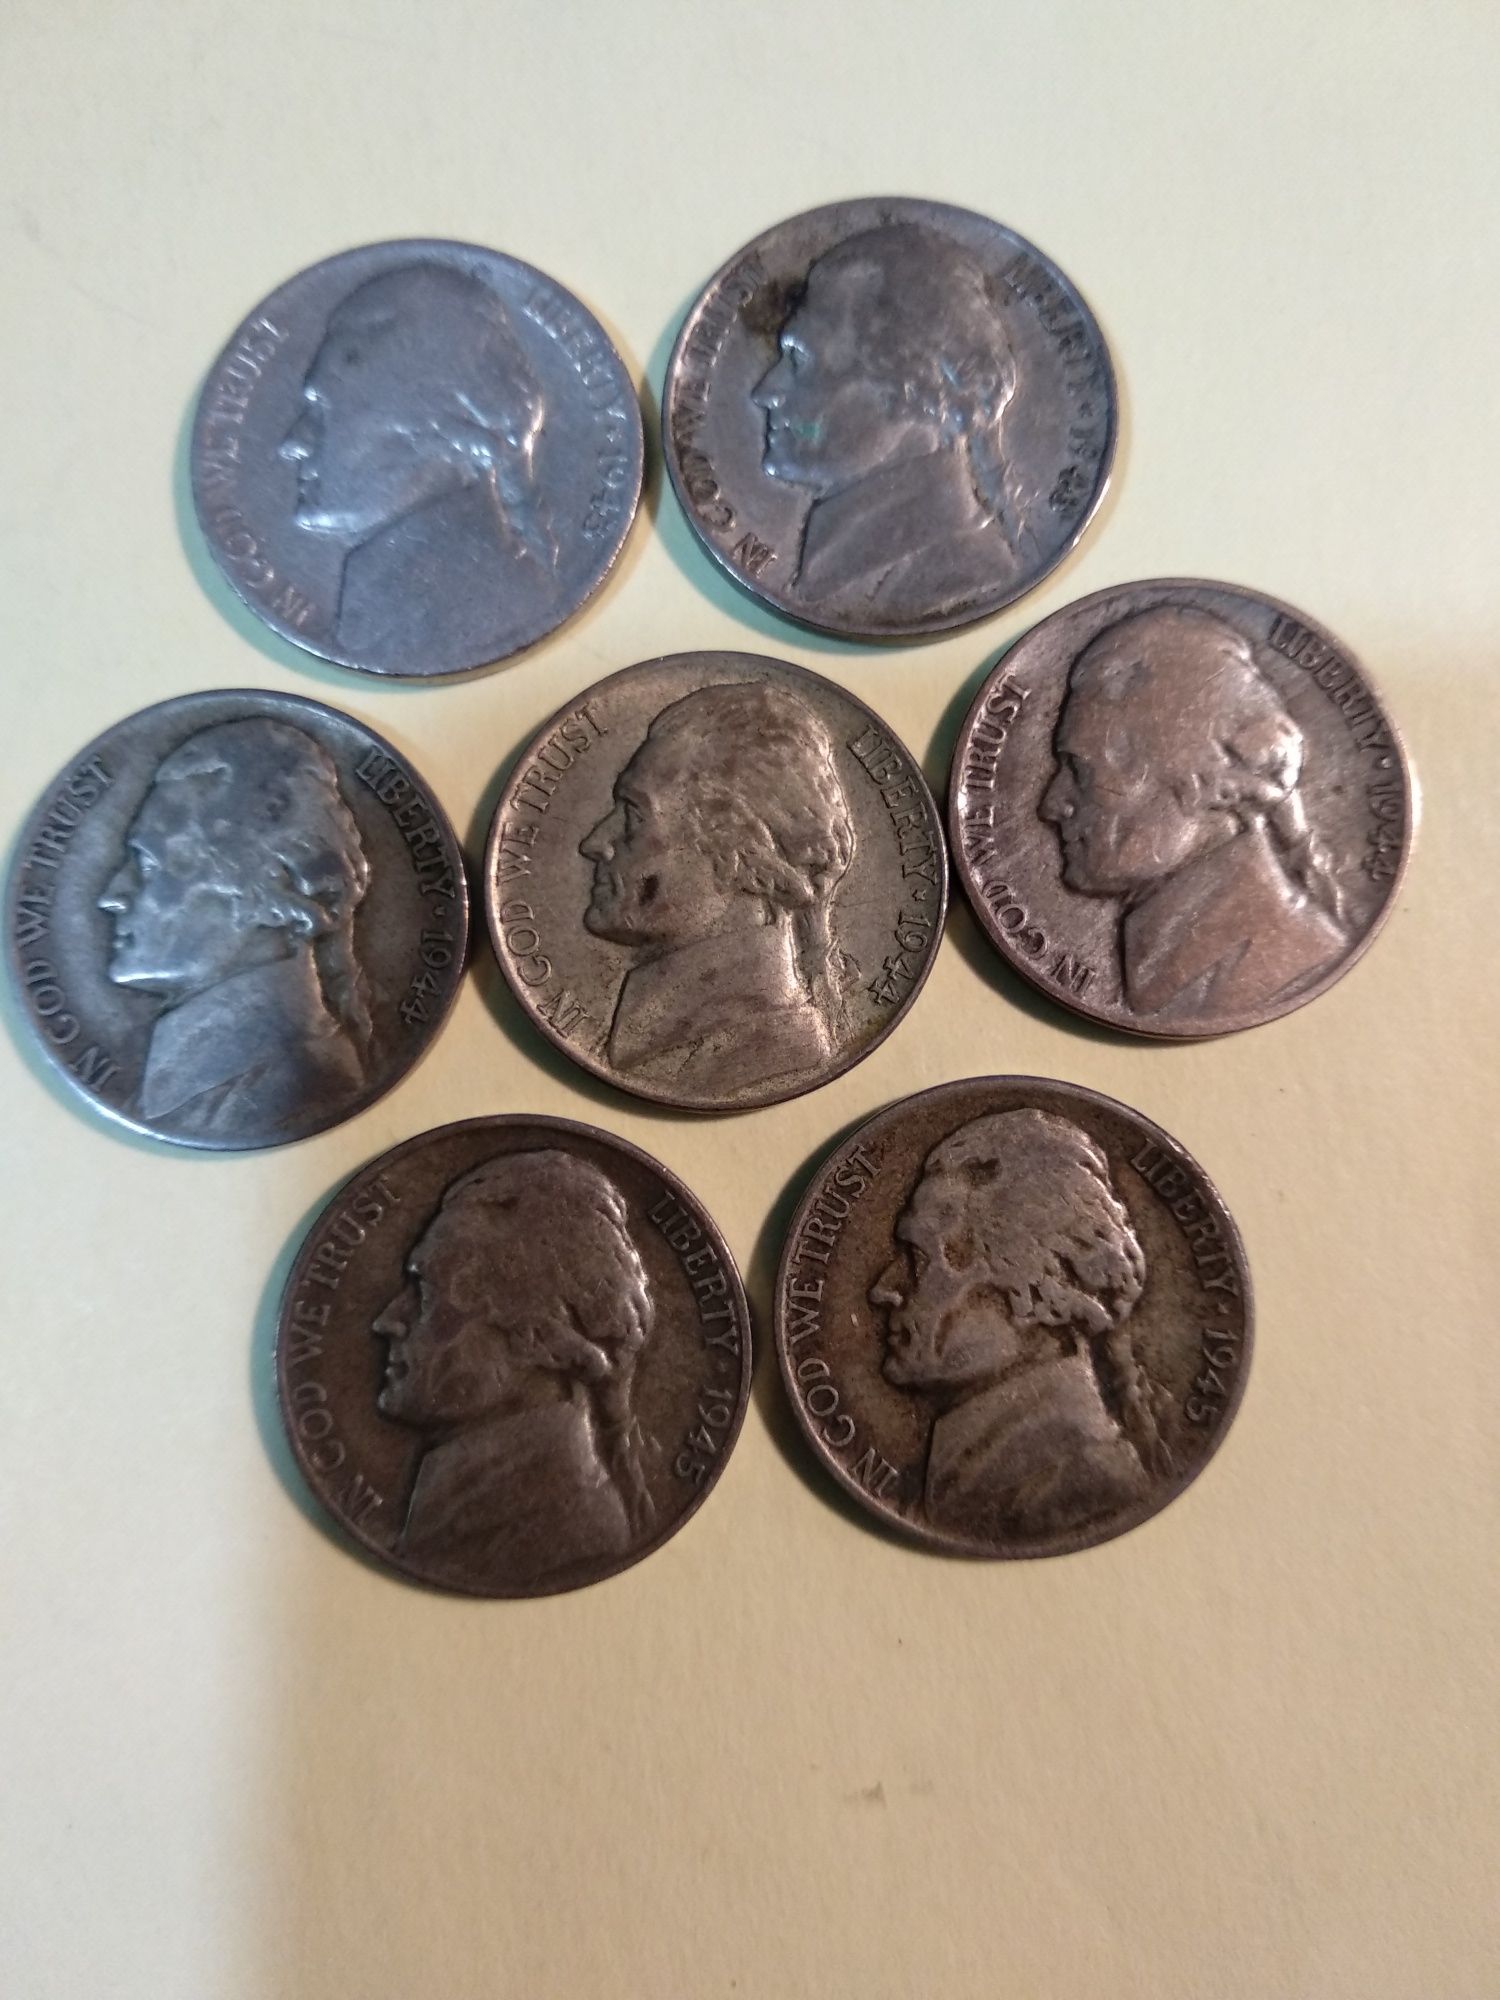 Moedas de 5 cêntimos "War Nickel" Prata EUA circulados